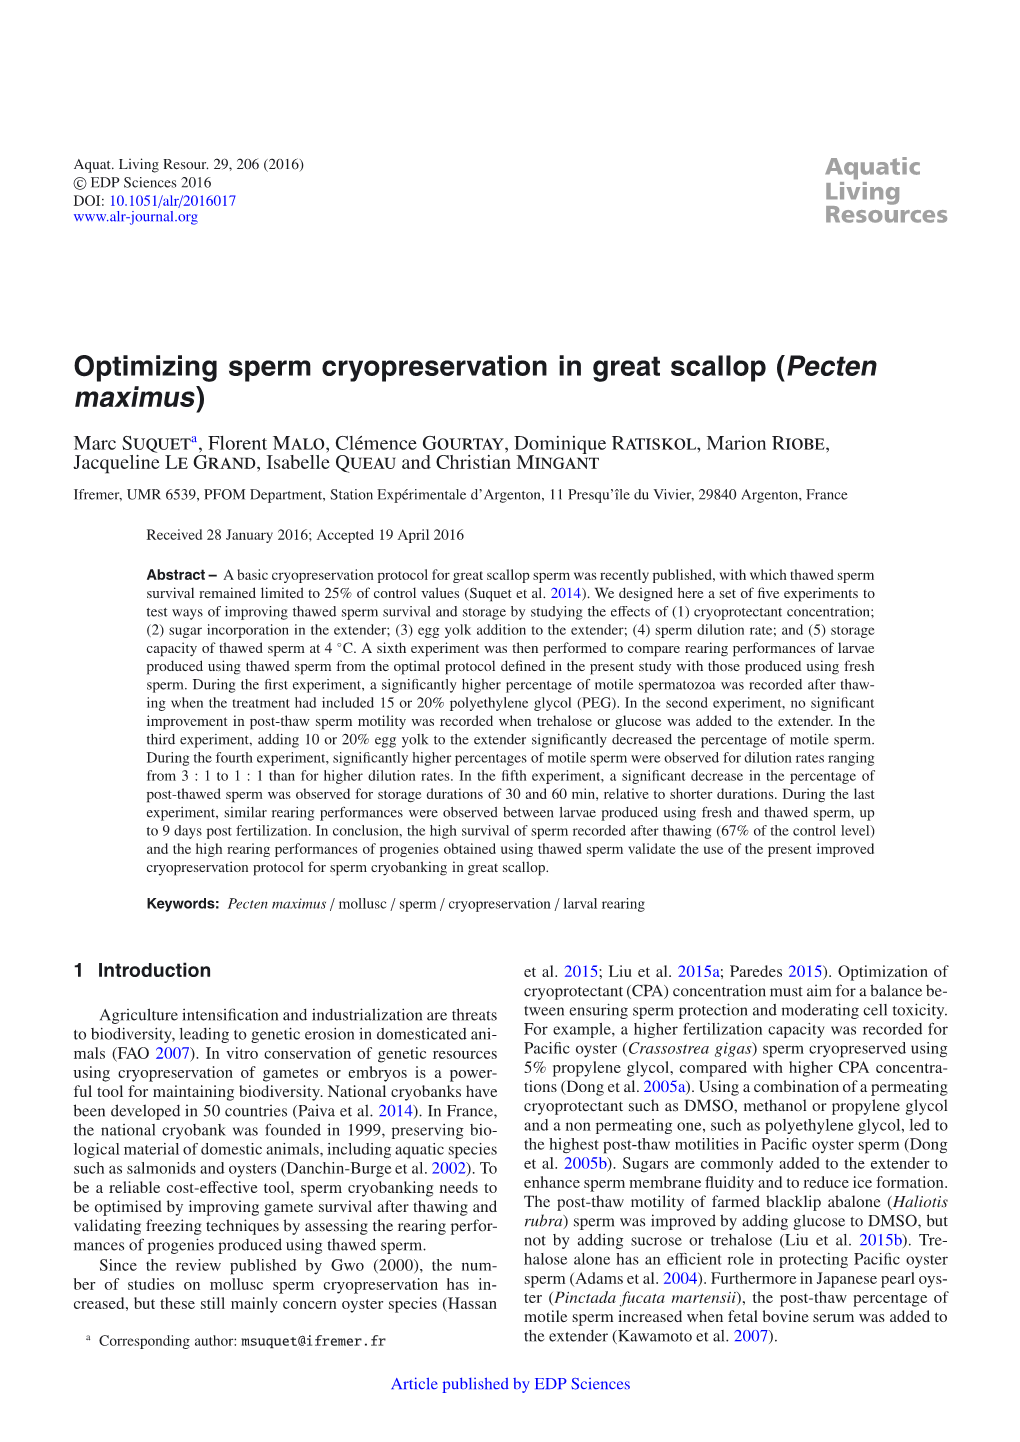 Optimizing Sperm Cryopreservation in Great Scallop (Pecten Maximus)